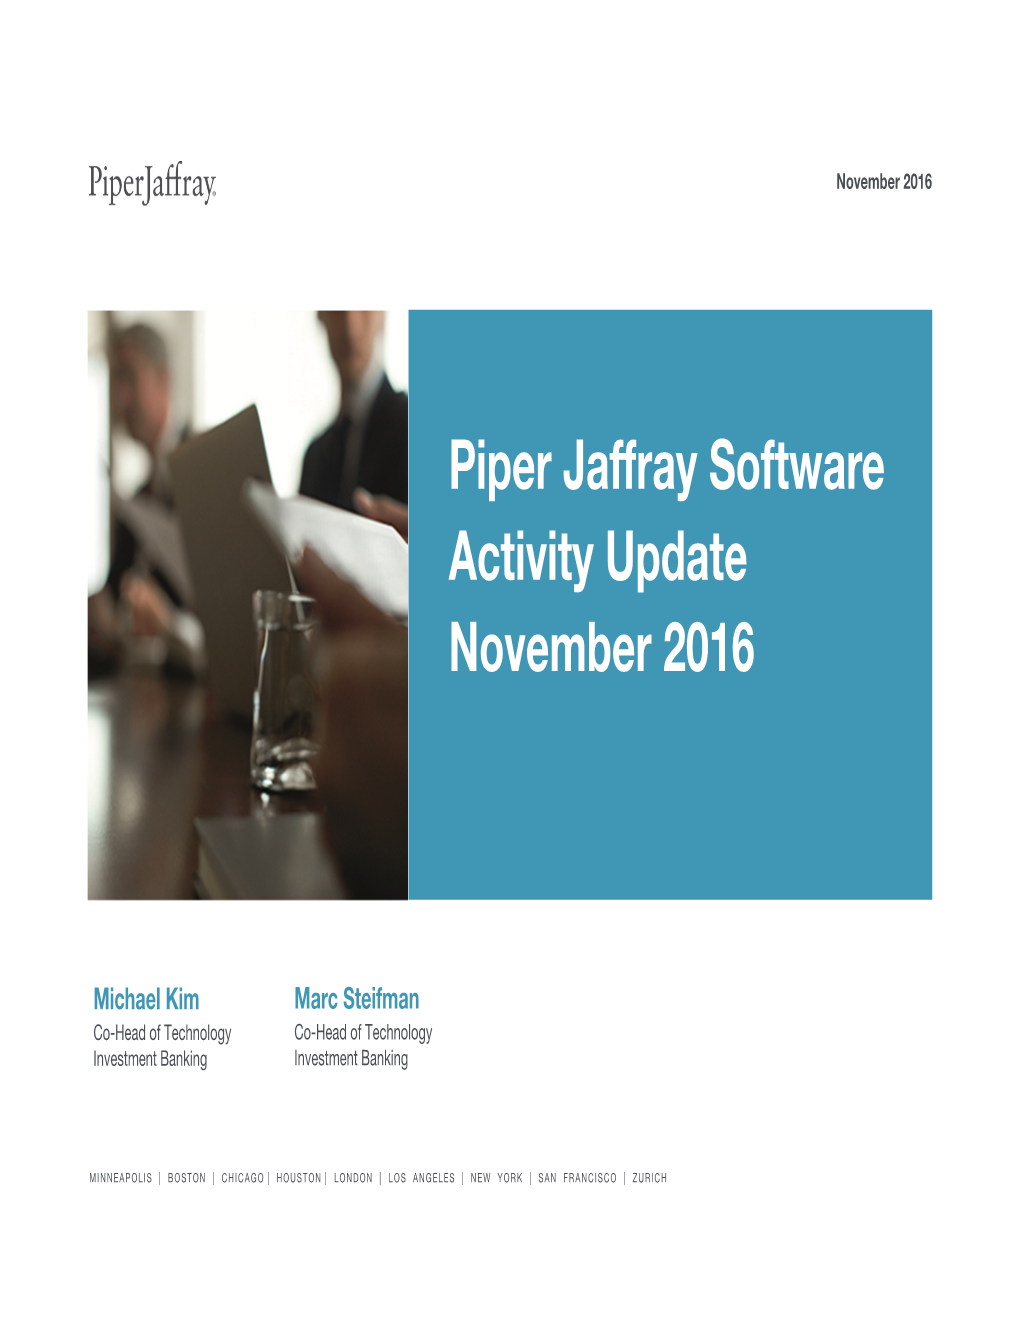 Piper Jaffray Software Activity Update November 2016